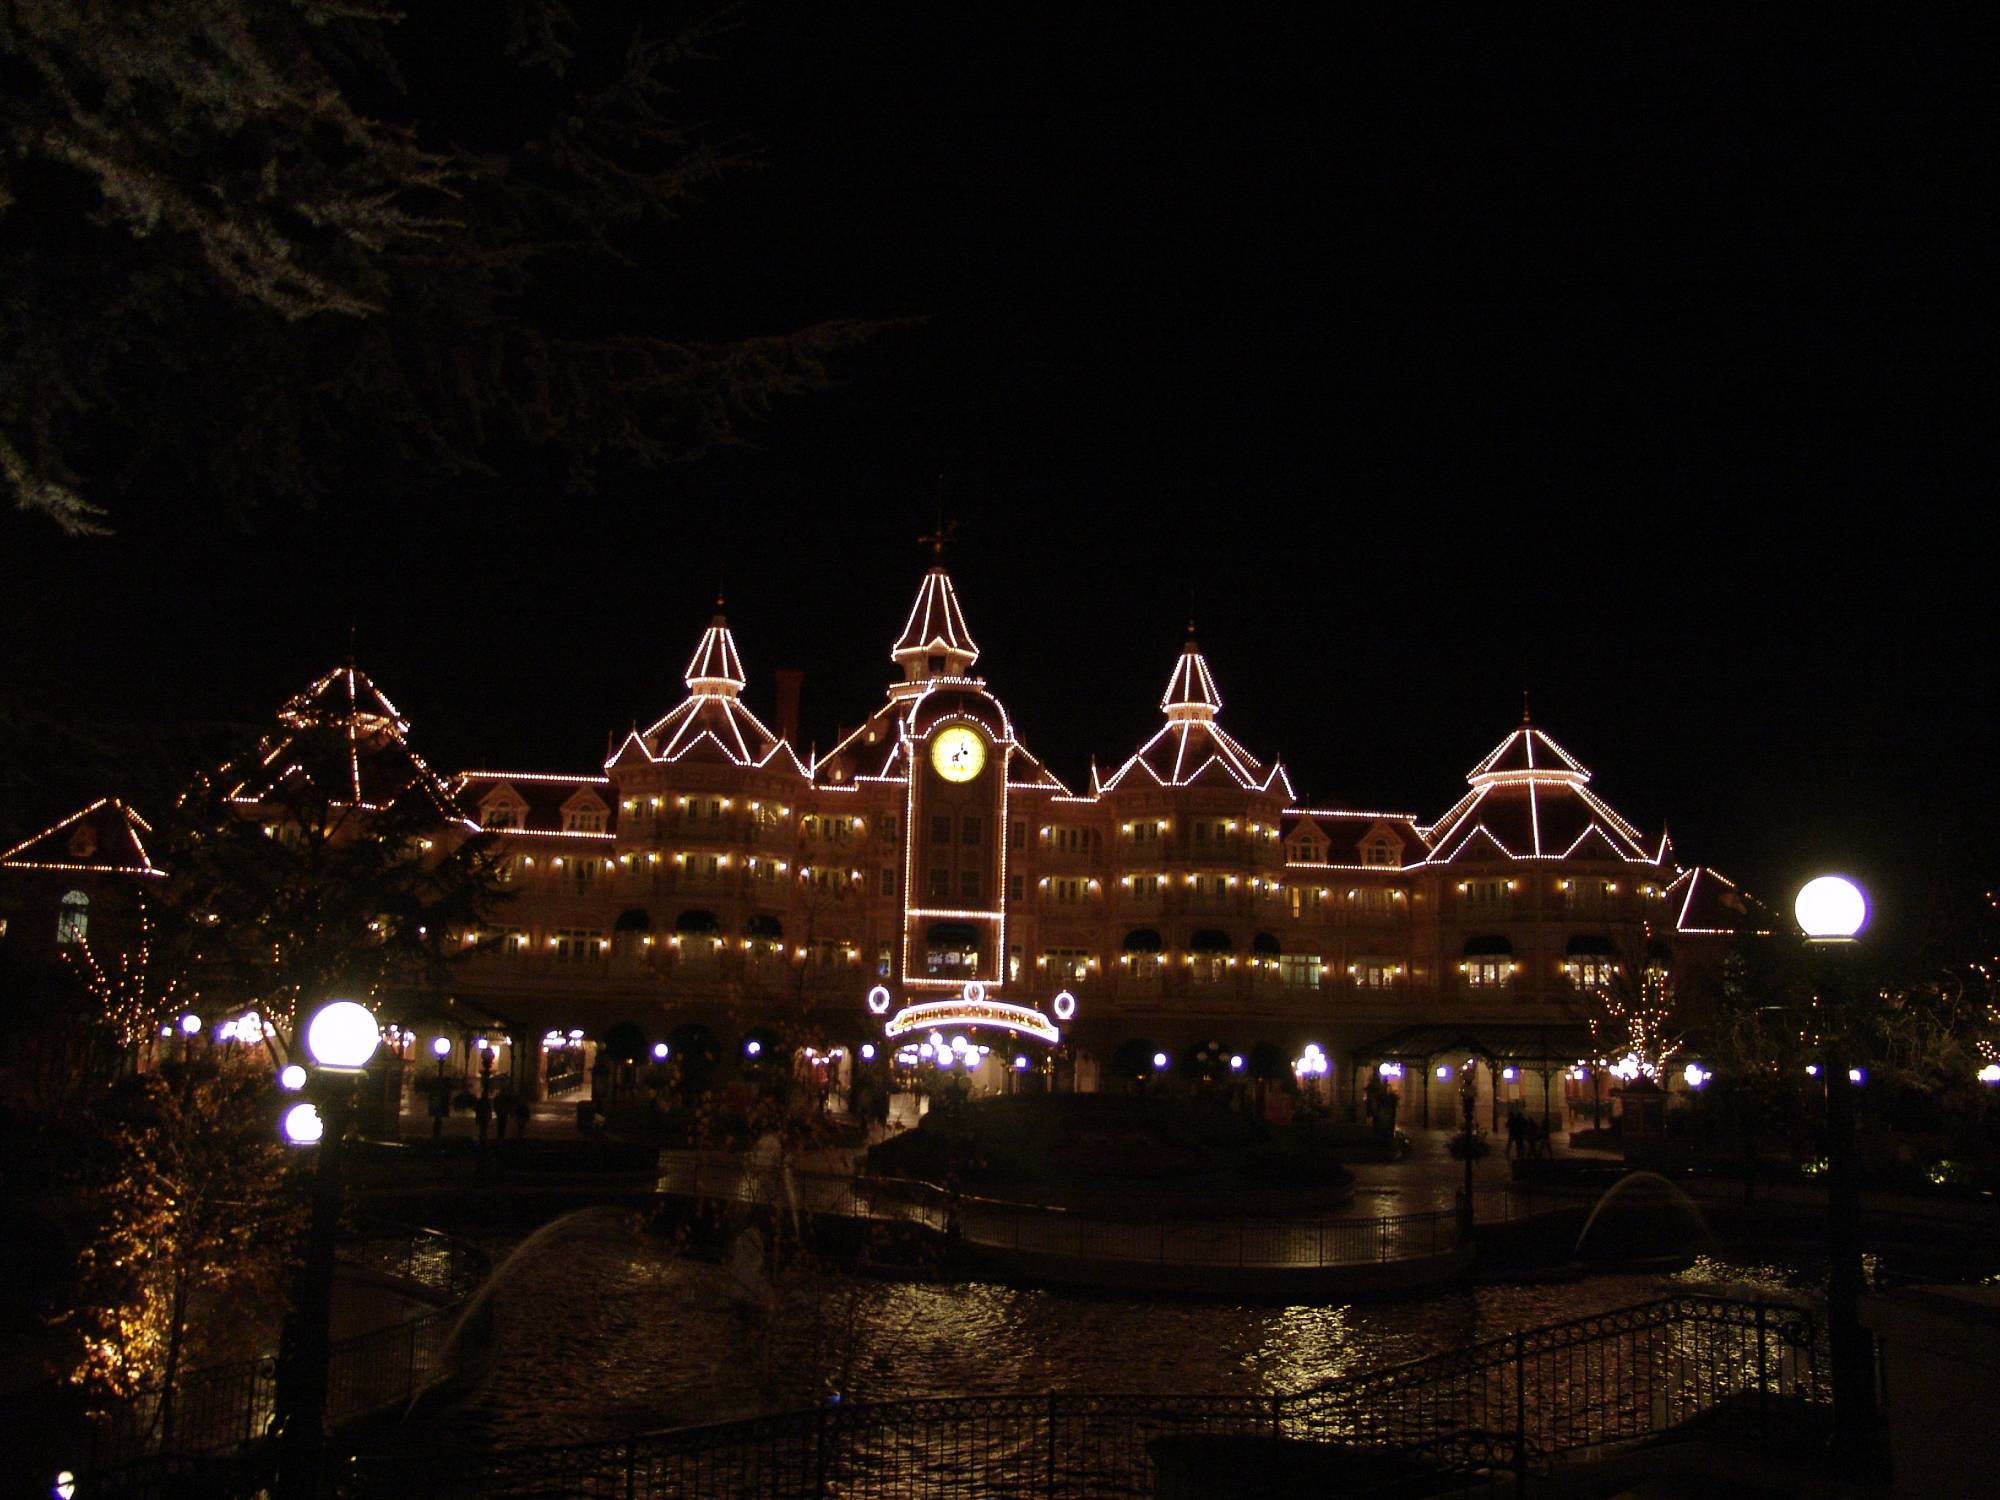 Disneyland Paris - Disneyland Hotel